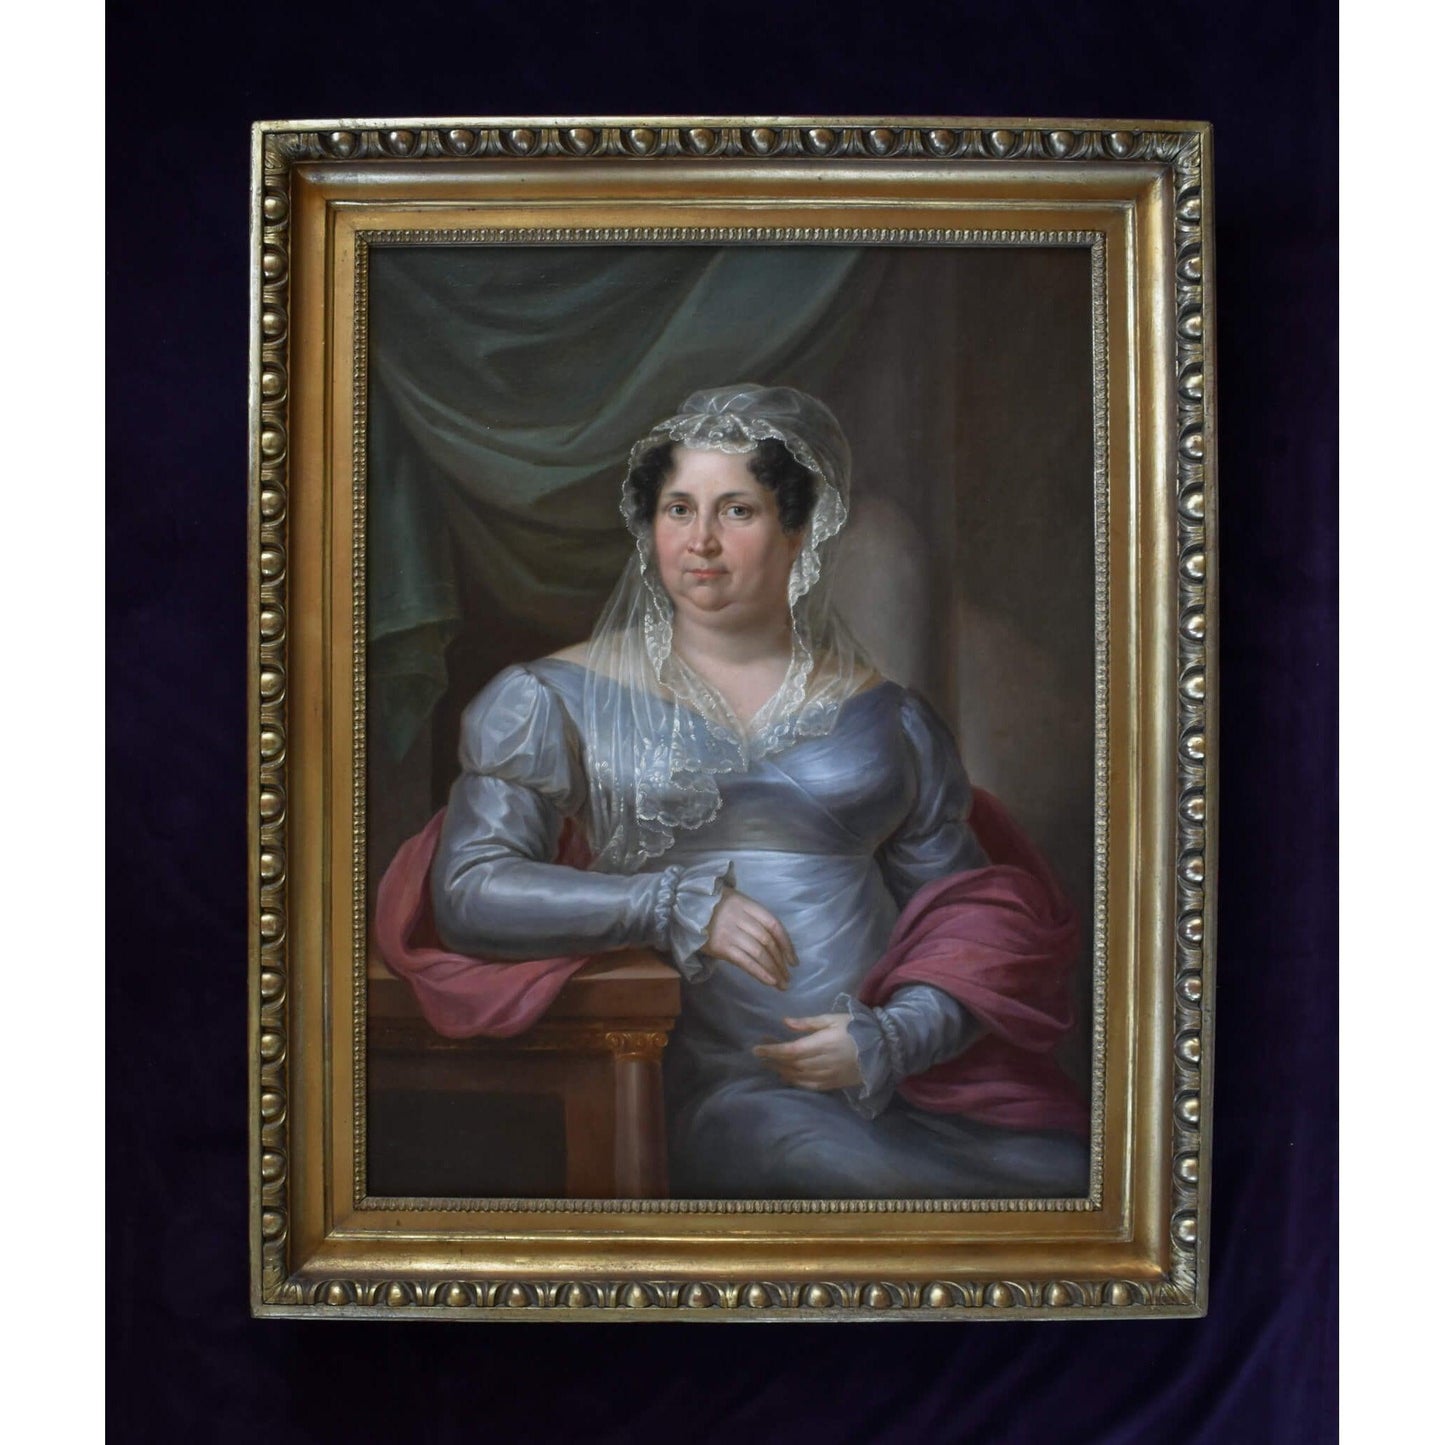 Antique portrait oil painting woman elegant dress 1822 by Anton Bayer for sale at Winckelmann Gallery